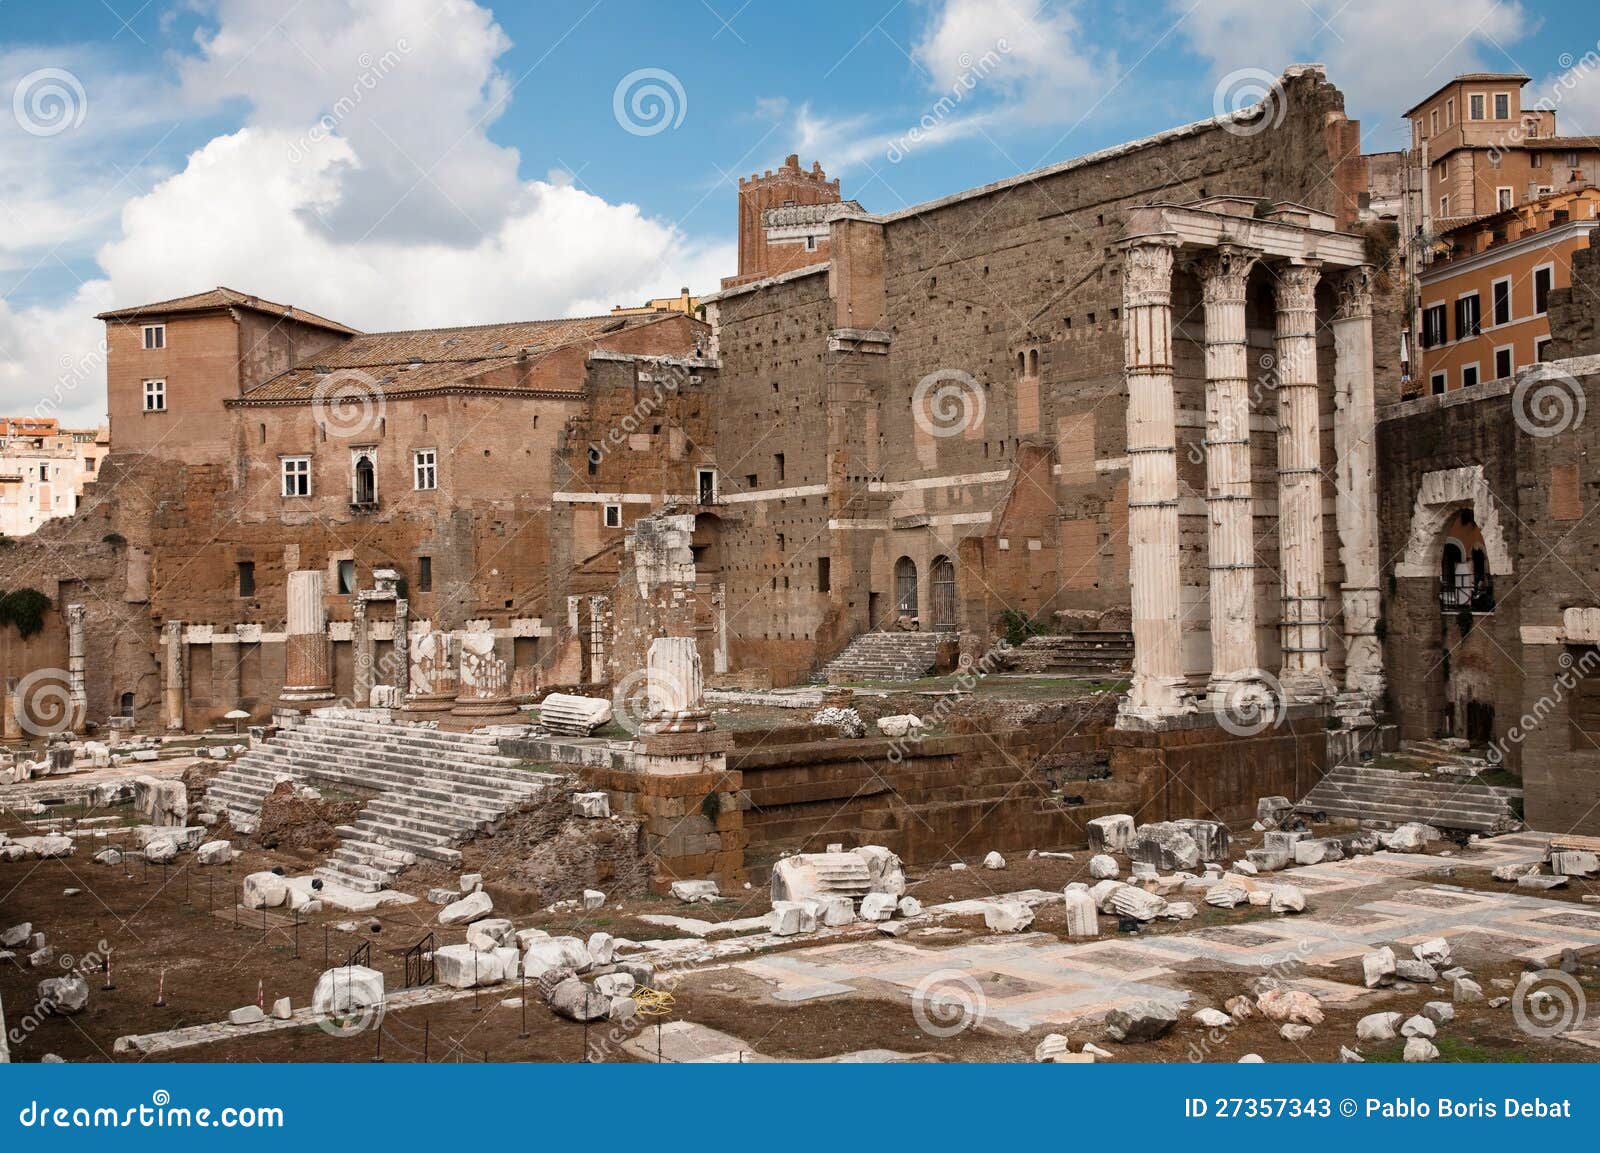 foro di augusto ruins at roma - italy